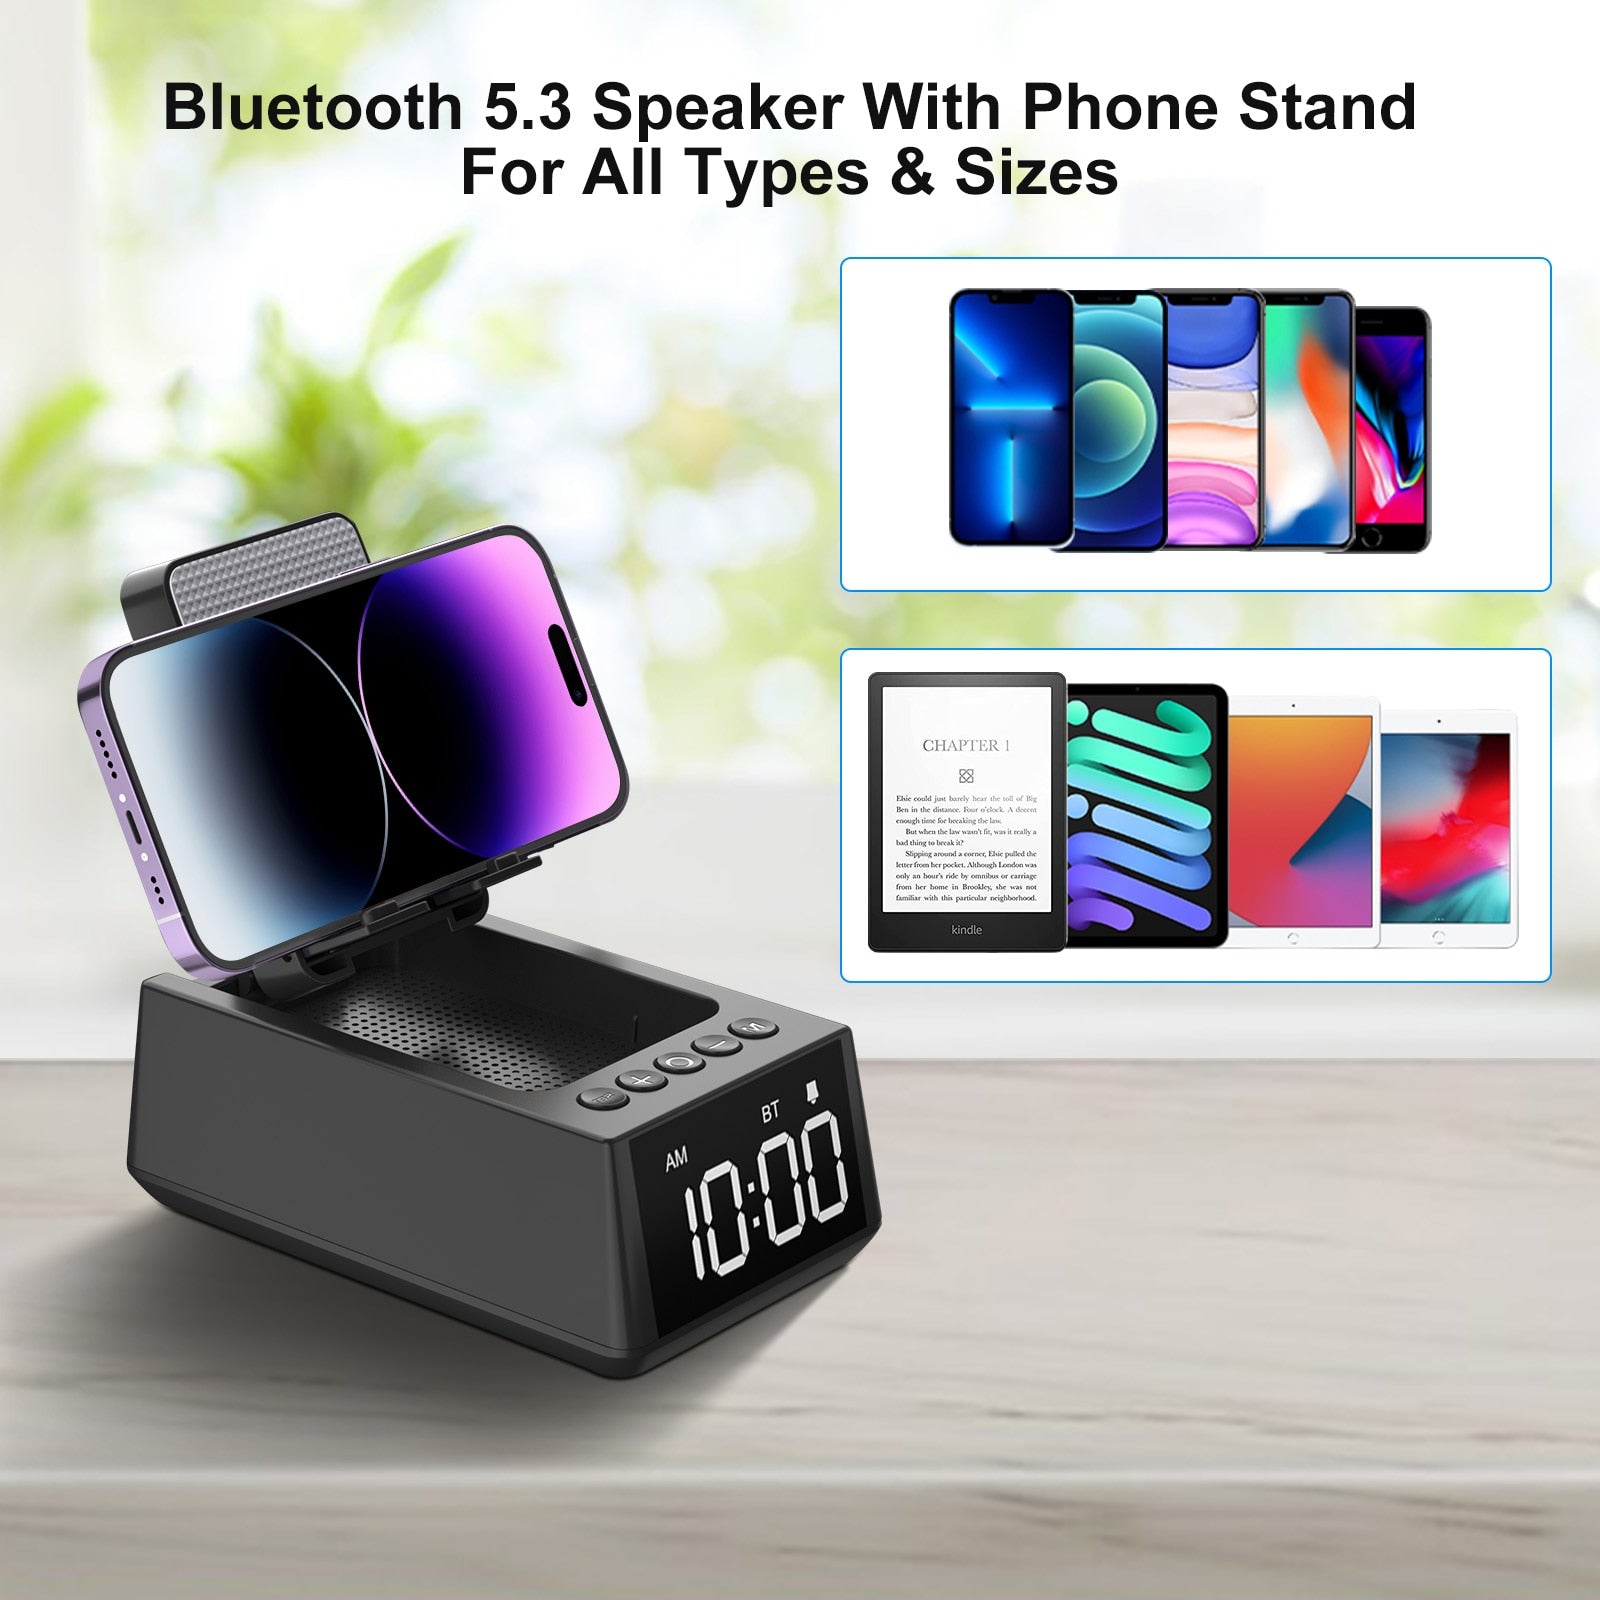 3 in 1 Bluetooth Speaker Stand